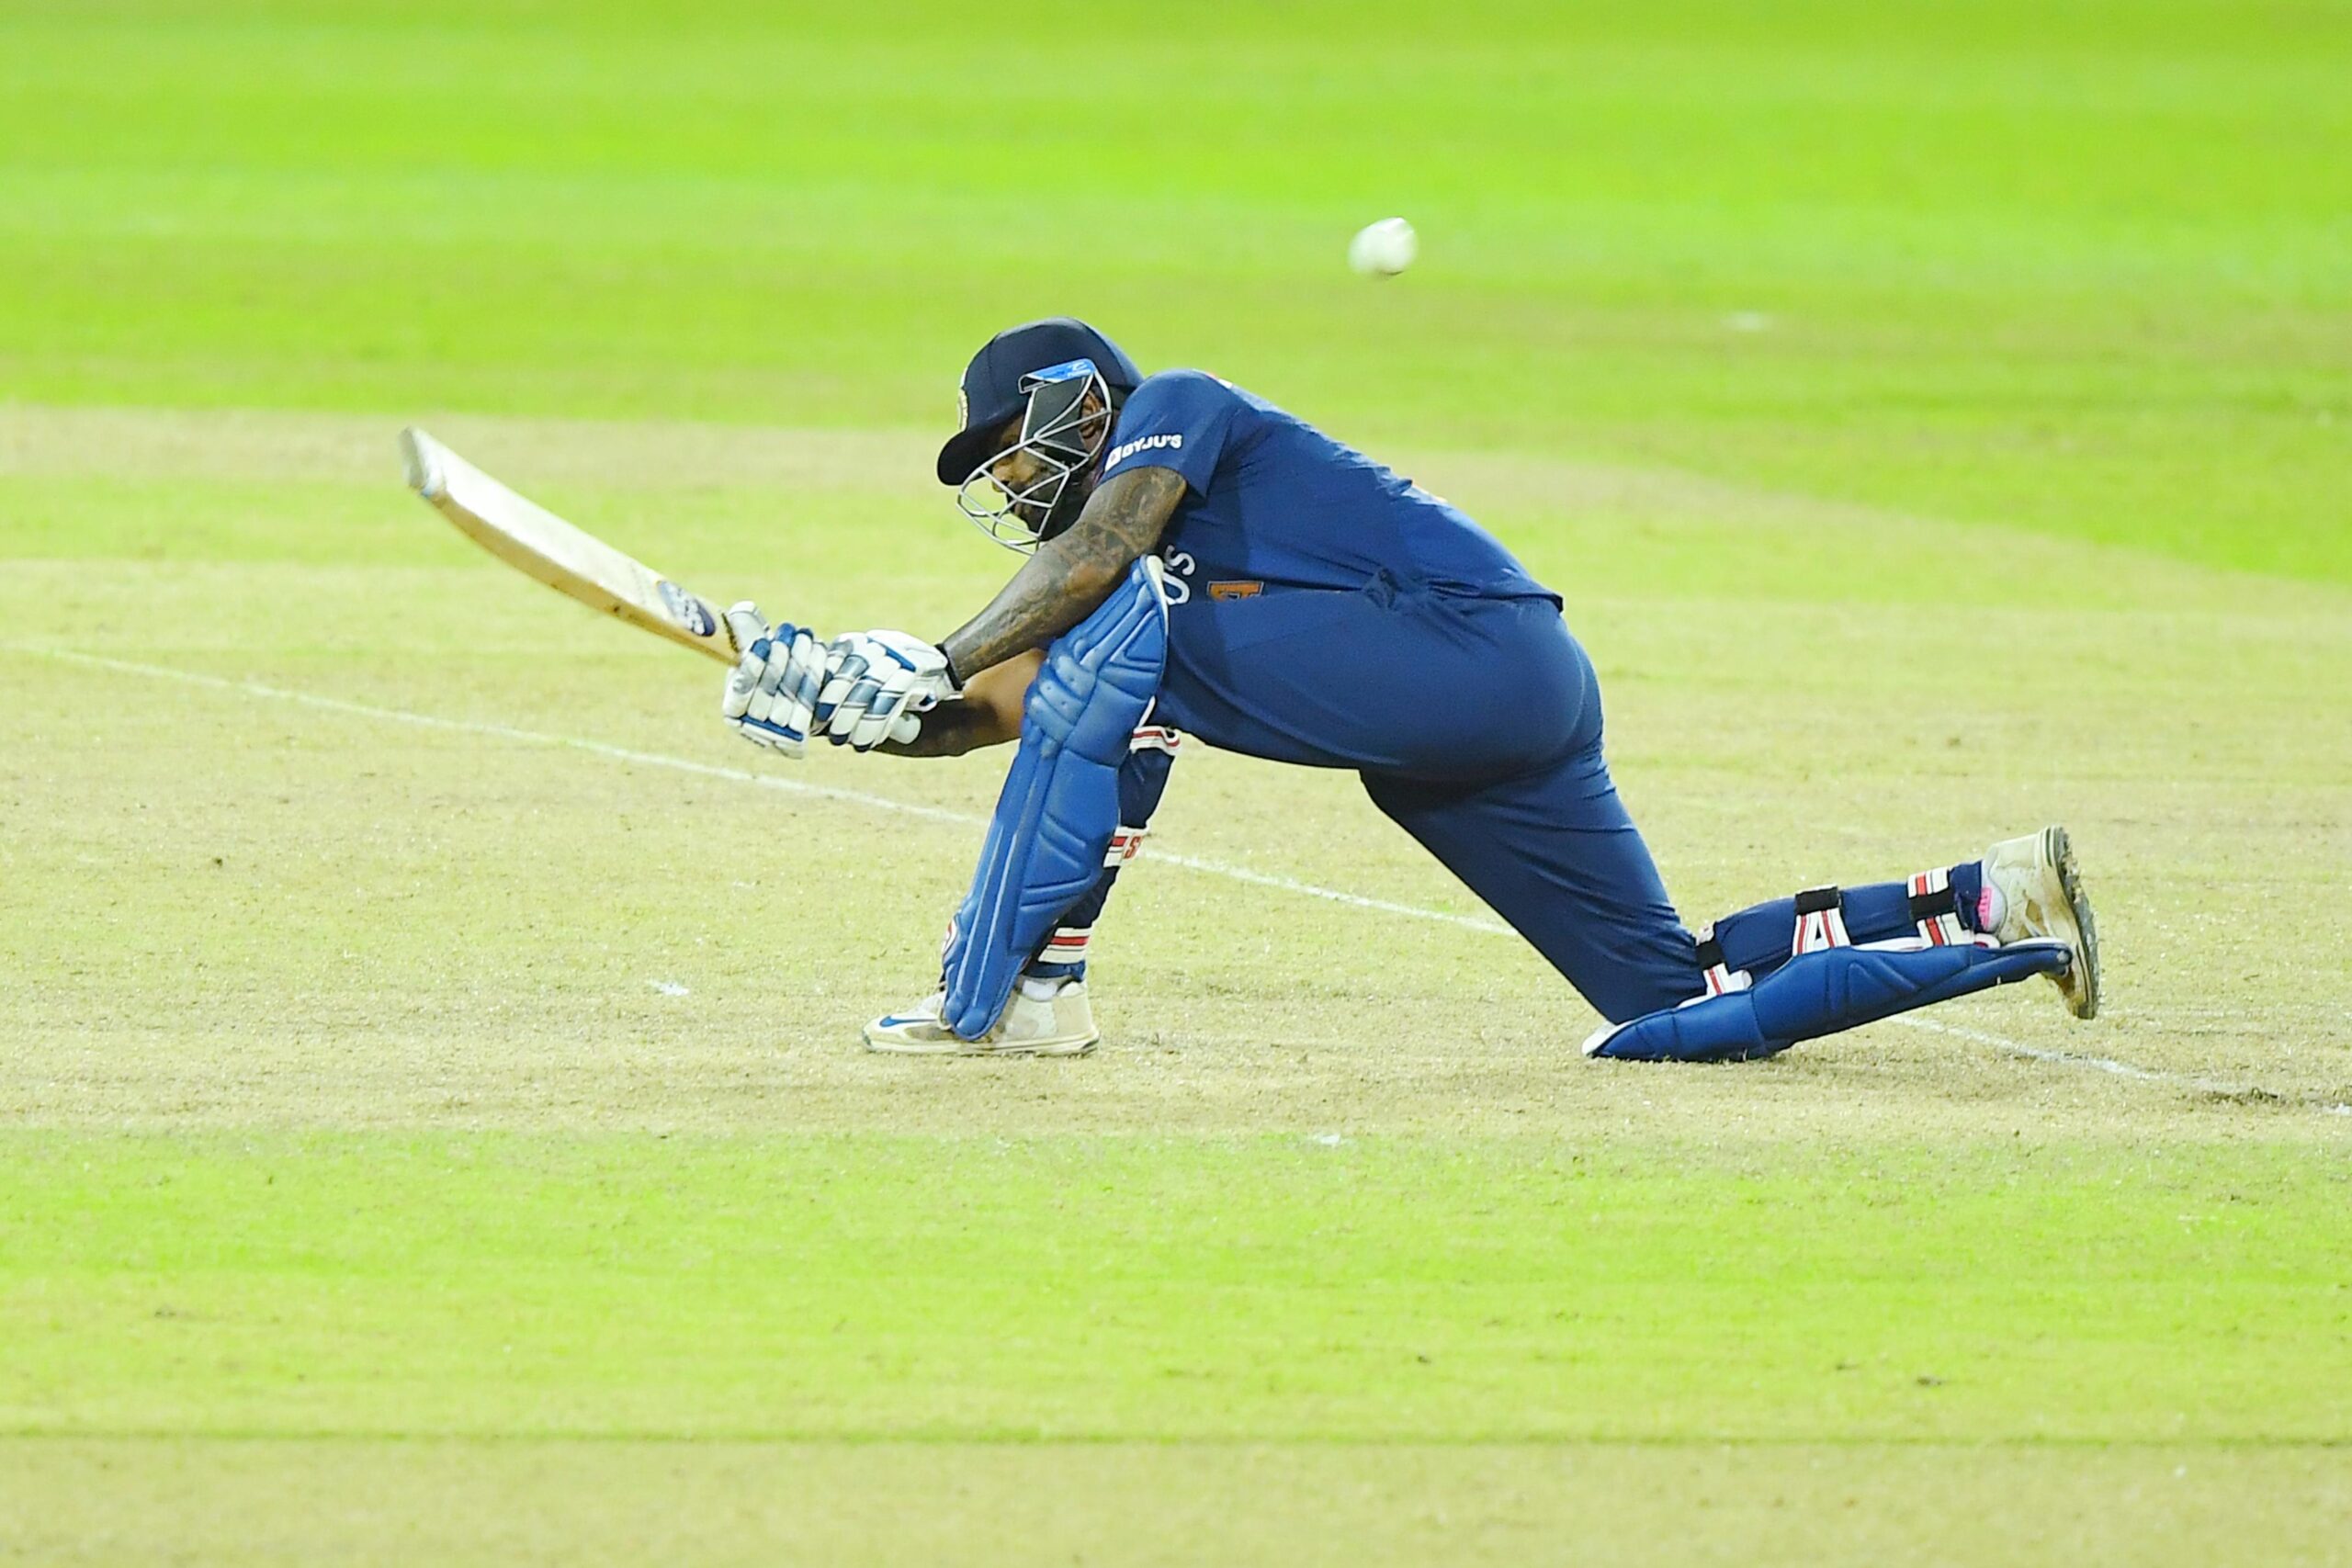 The Biggest Positive For Me Is Suryakumar Yadav From The ODI Series Against Sri Lanka: Ashish Nehra